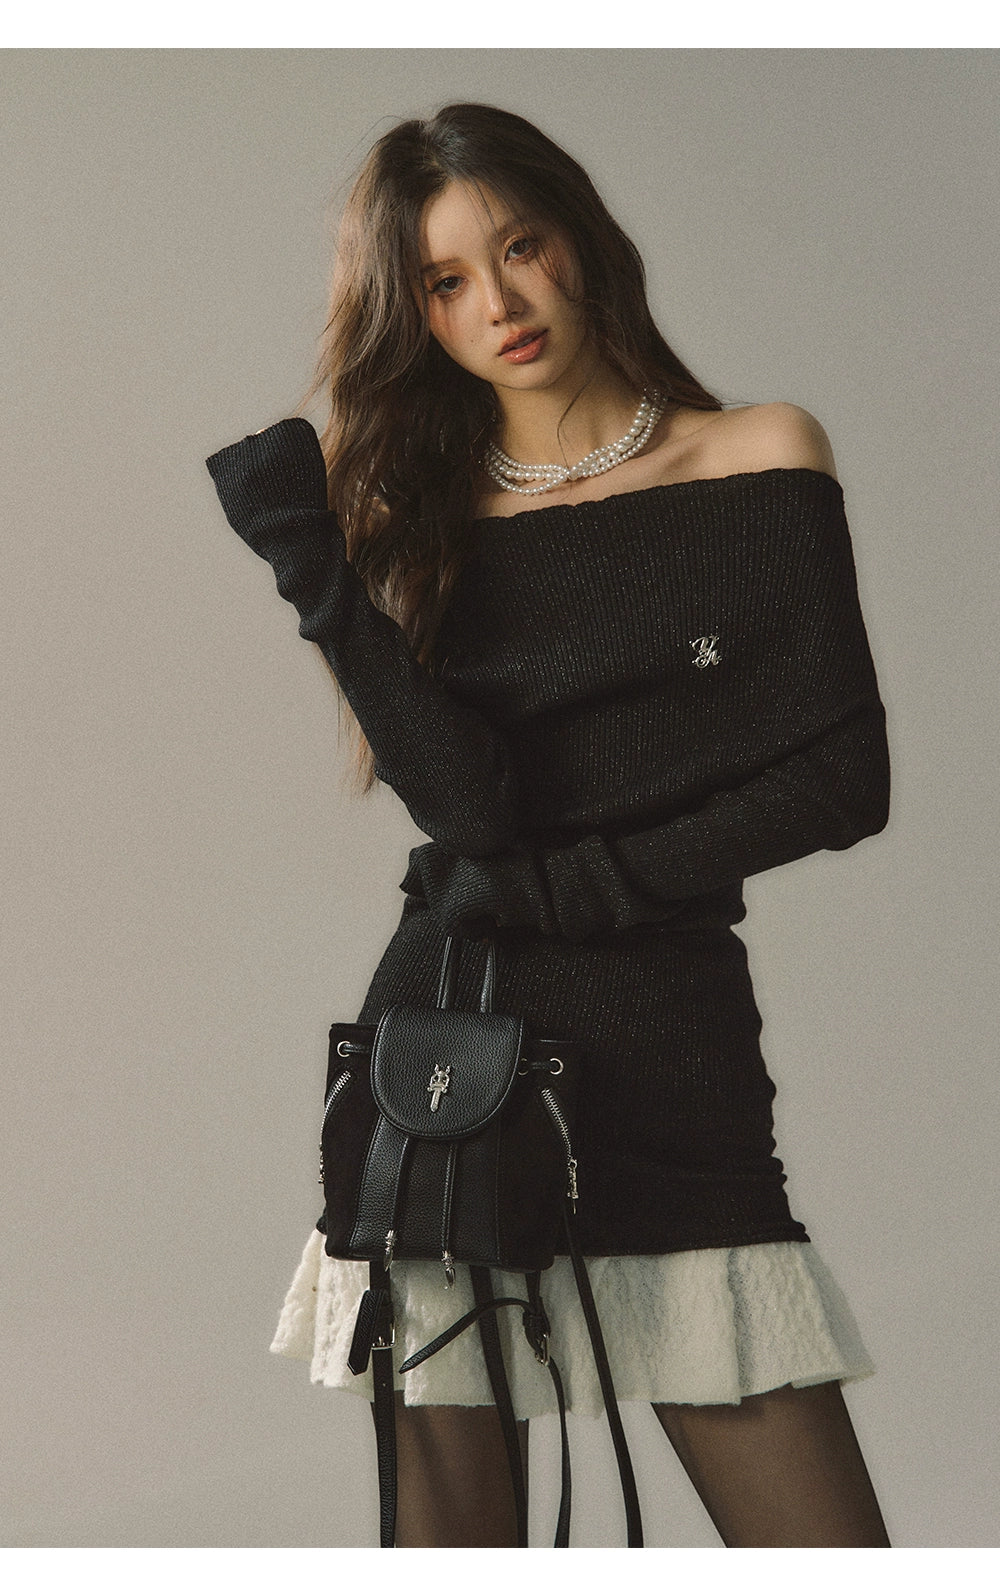 Khaki &amp; Black Off-shoulder Knitted Mini Dress - CHINASQUAD